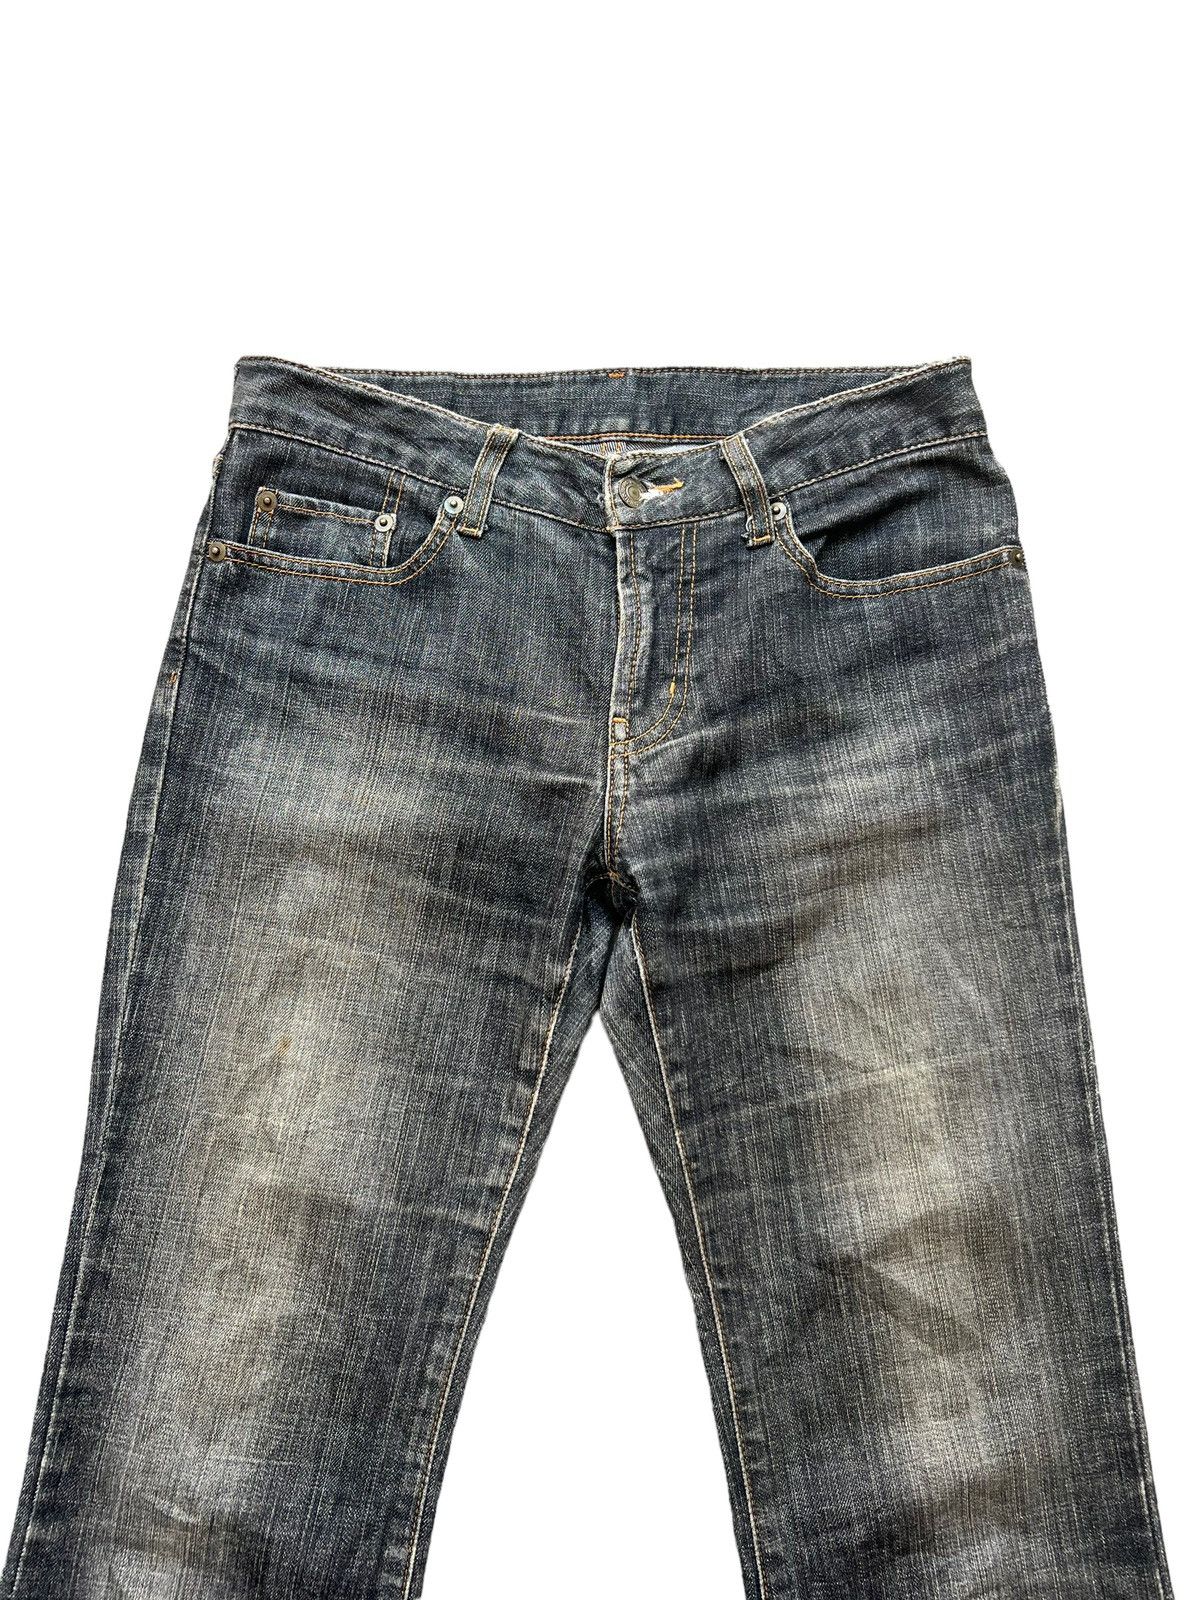 Uniqlo Black Low Rise Bootcut Flare Denim Jeans 30x29 - 4